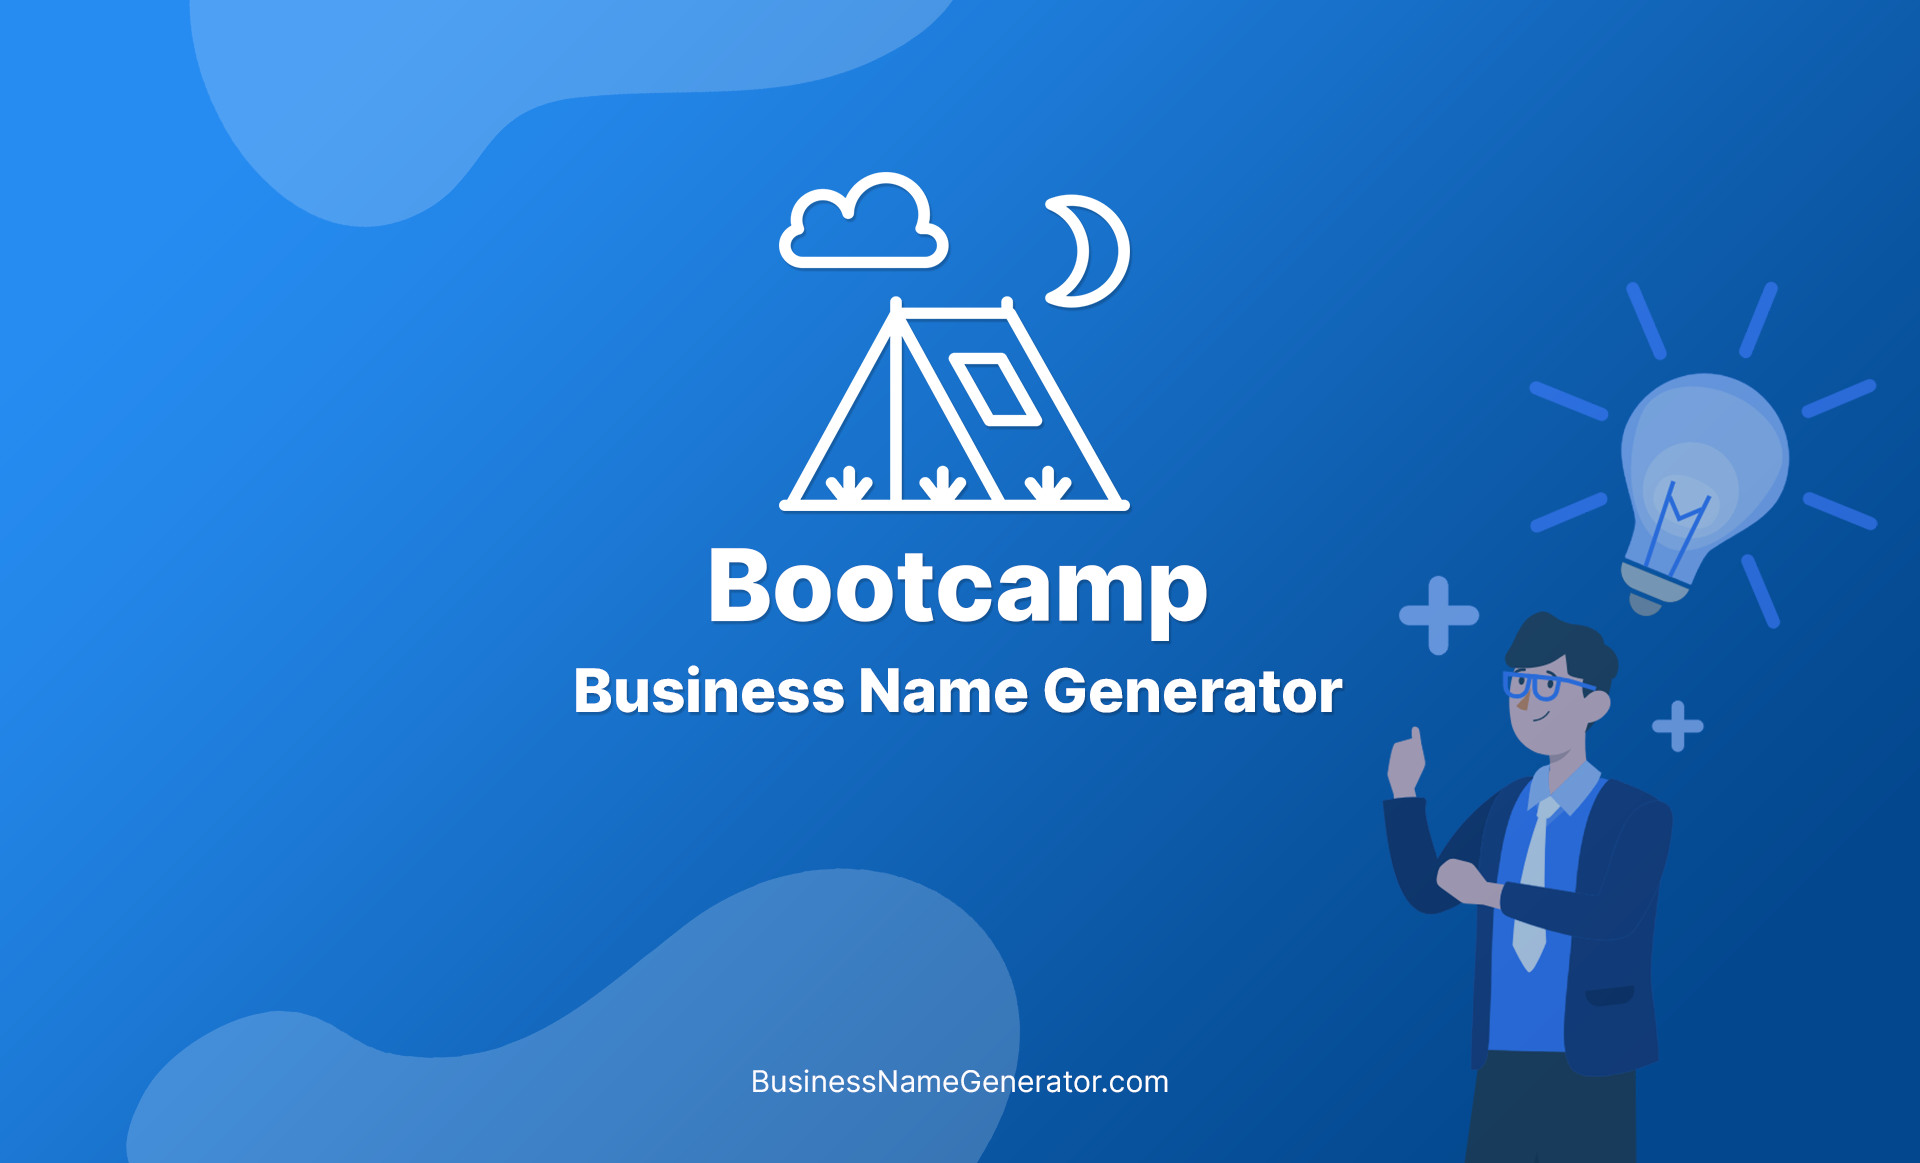 Bootcamp Business Name Generator